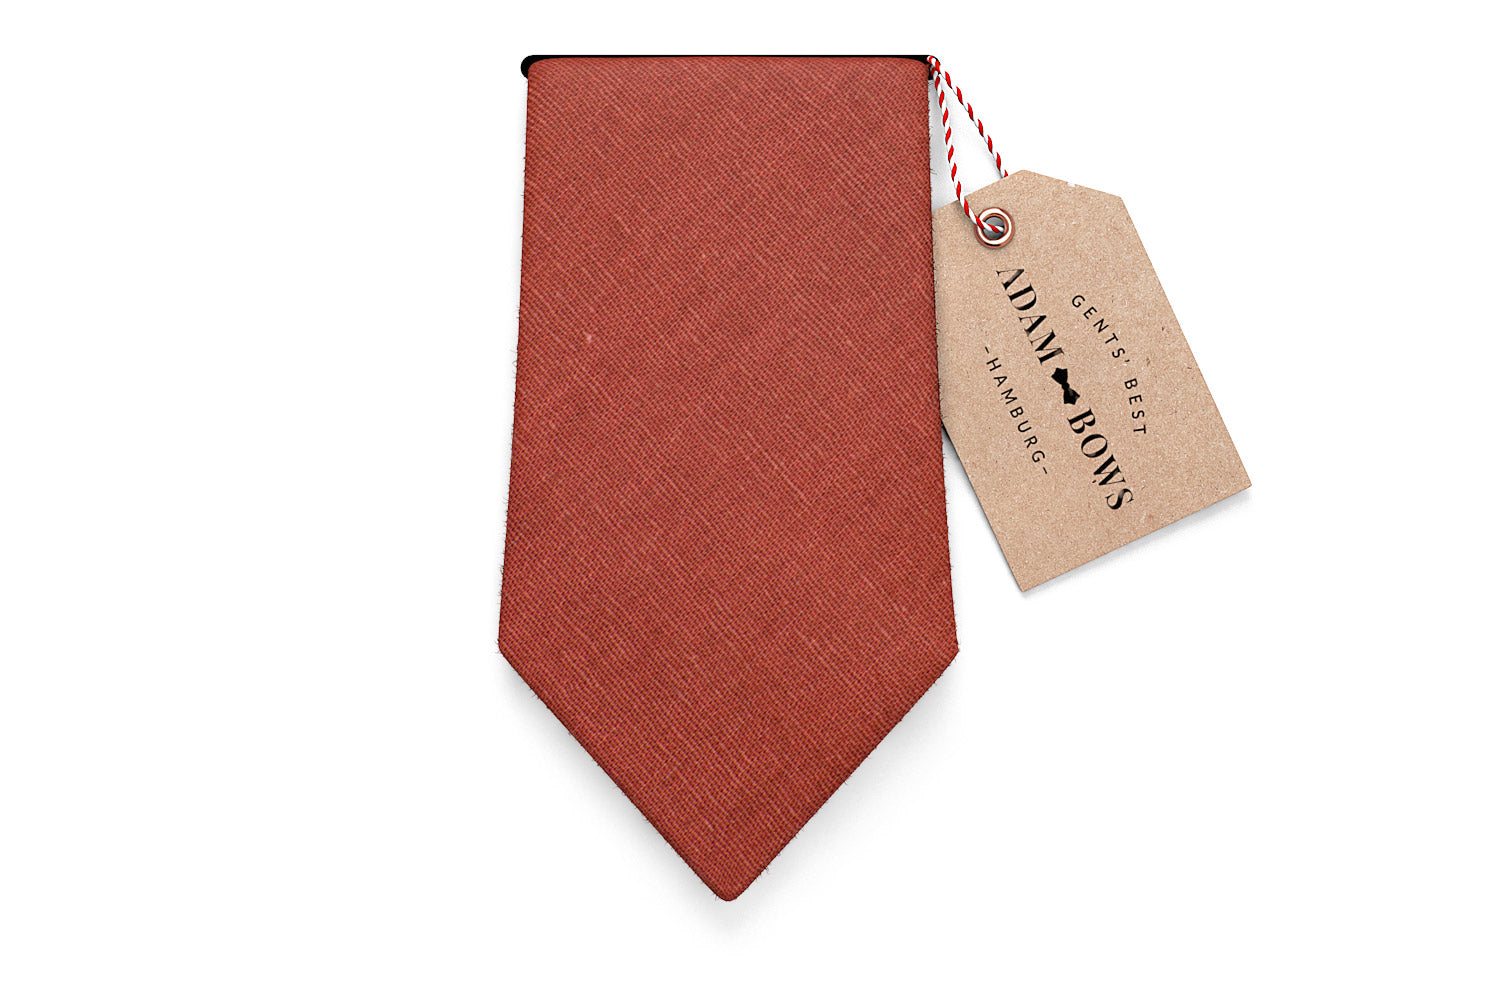 adam-bows-krawatte-rost-rot-vintage-leinen-frederik